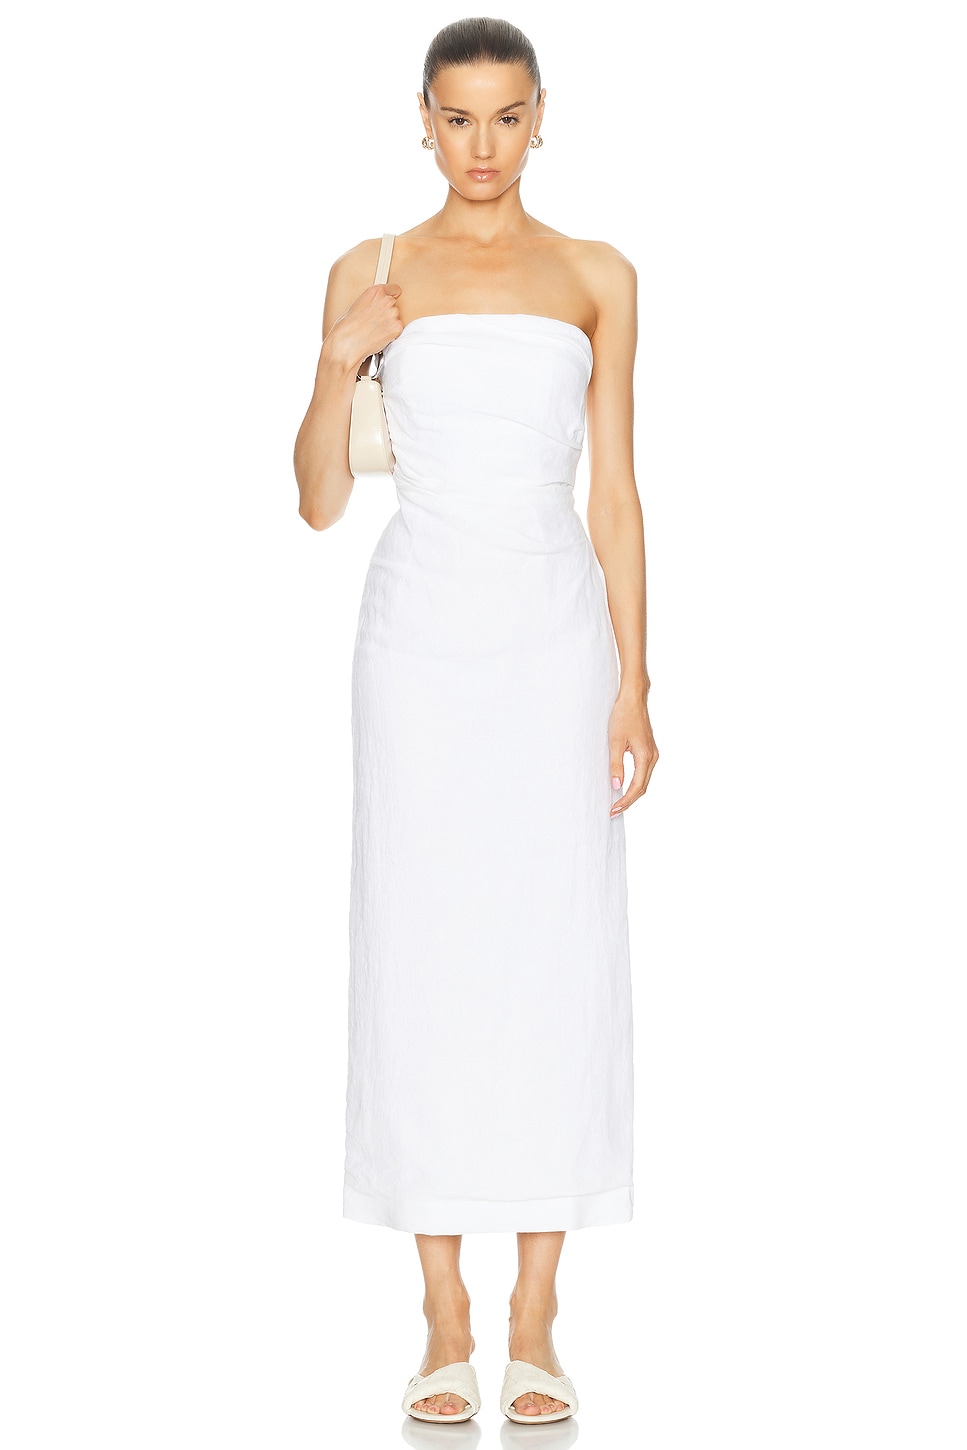 Sabella Dress in White